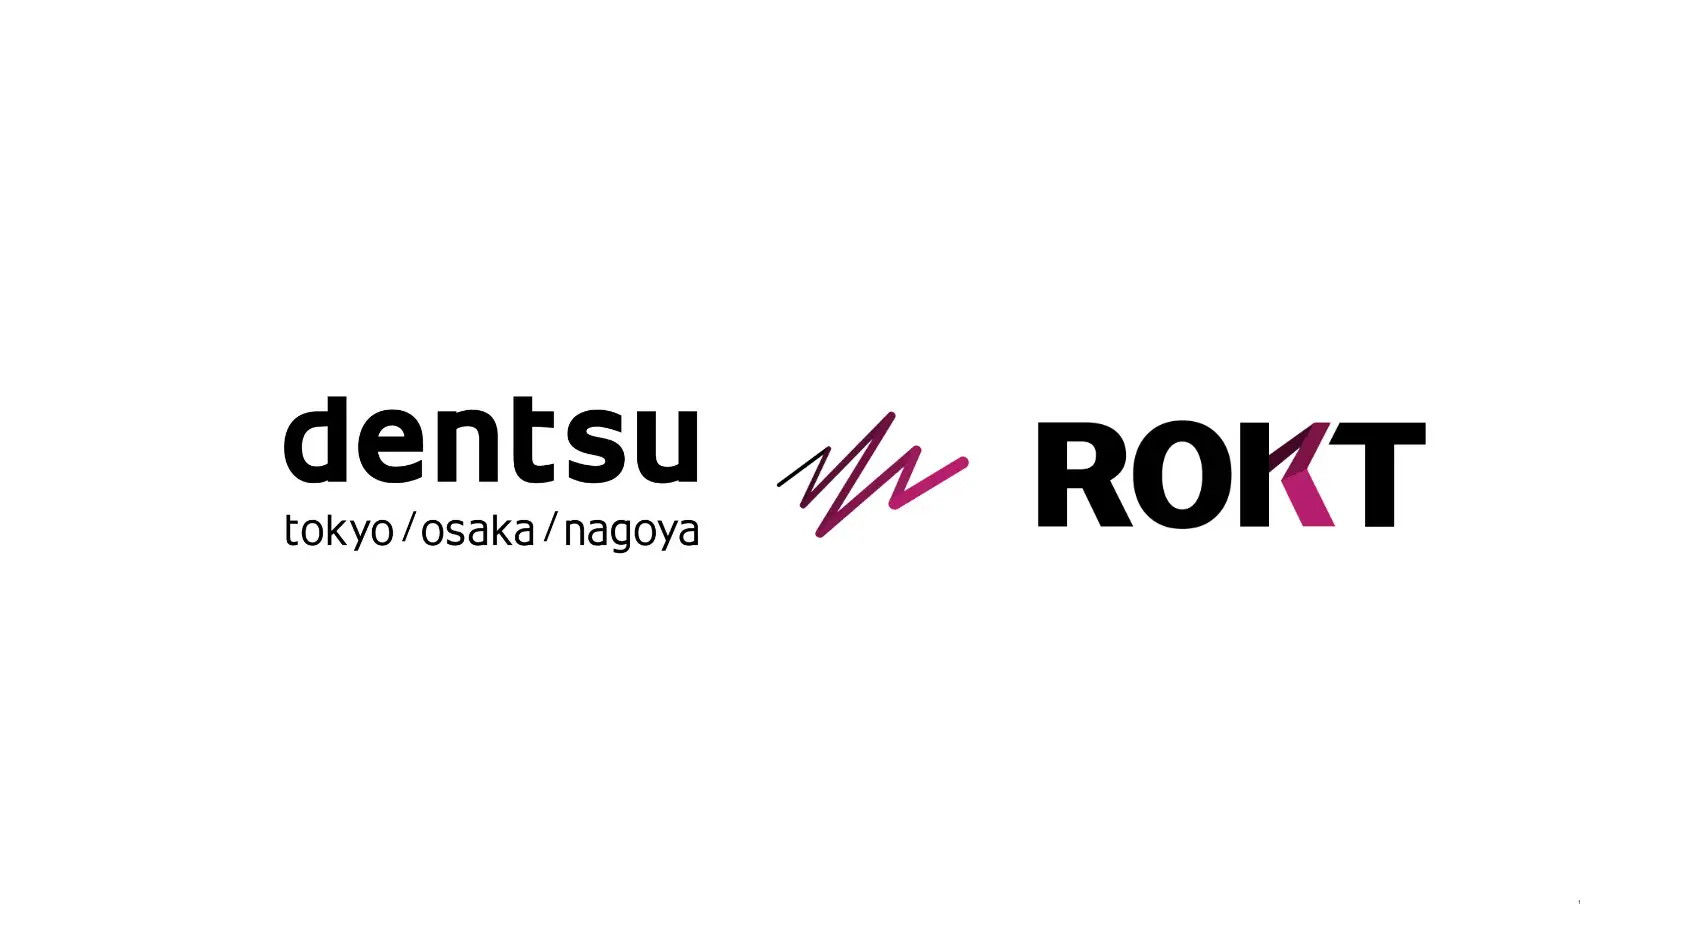 Roktが、日本のリテールメディア市場の拡大を目指して電通との業務提携を強化